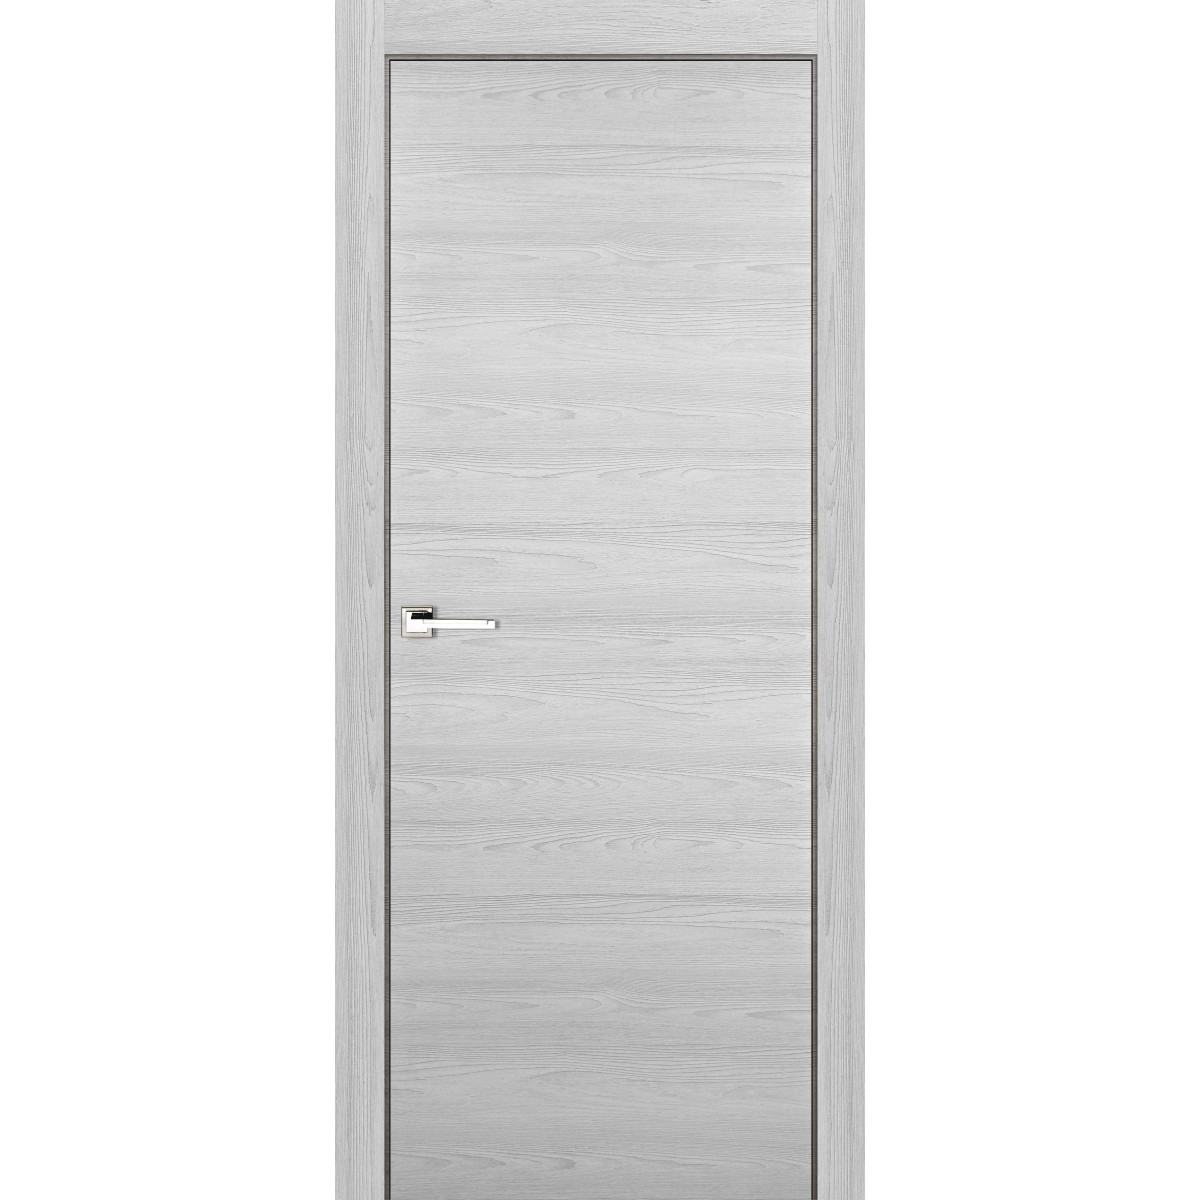 Дверь межкомнатная глухая 70x200 см, ламинация, цвет ясень серый